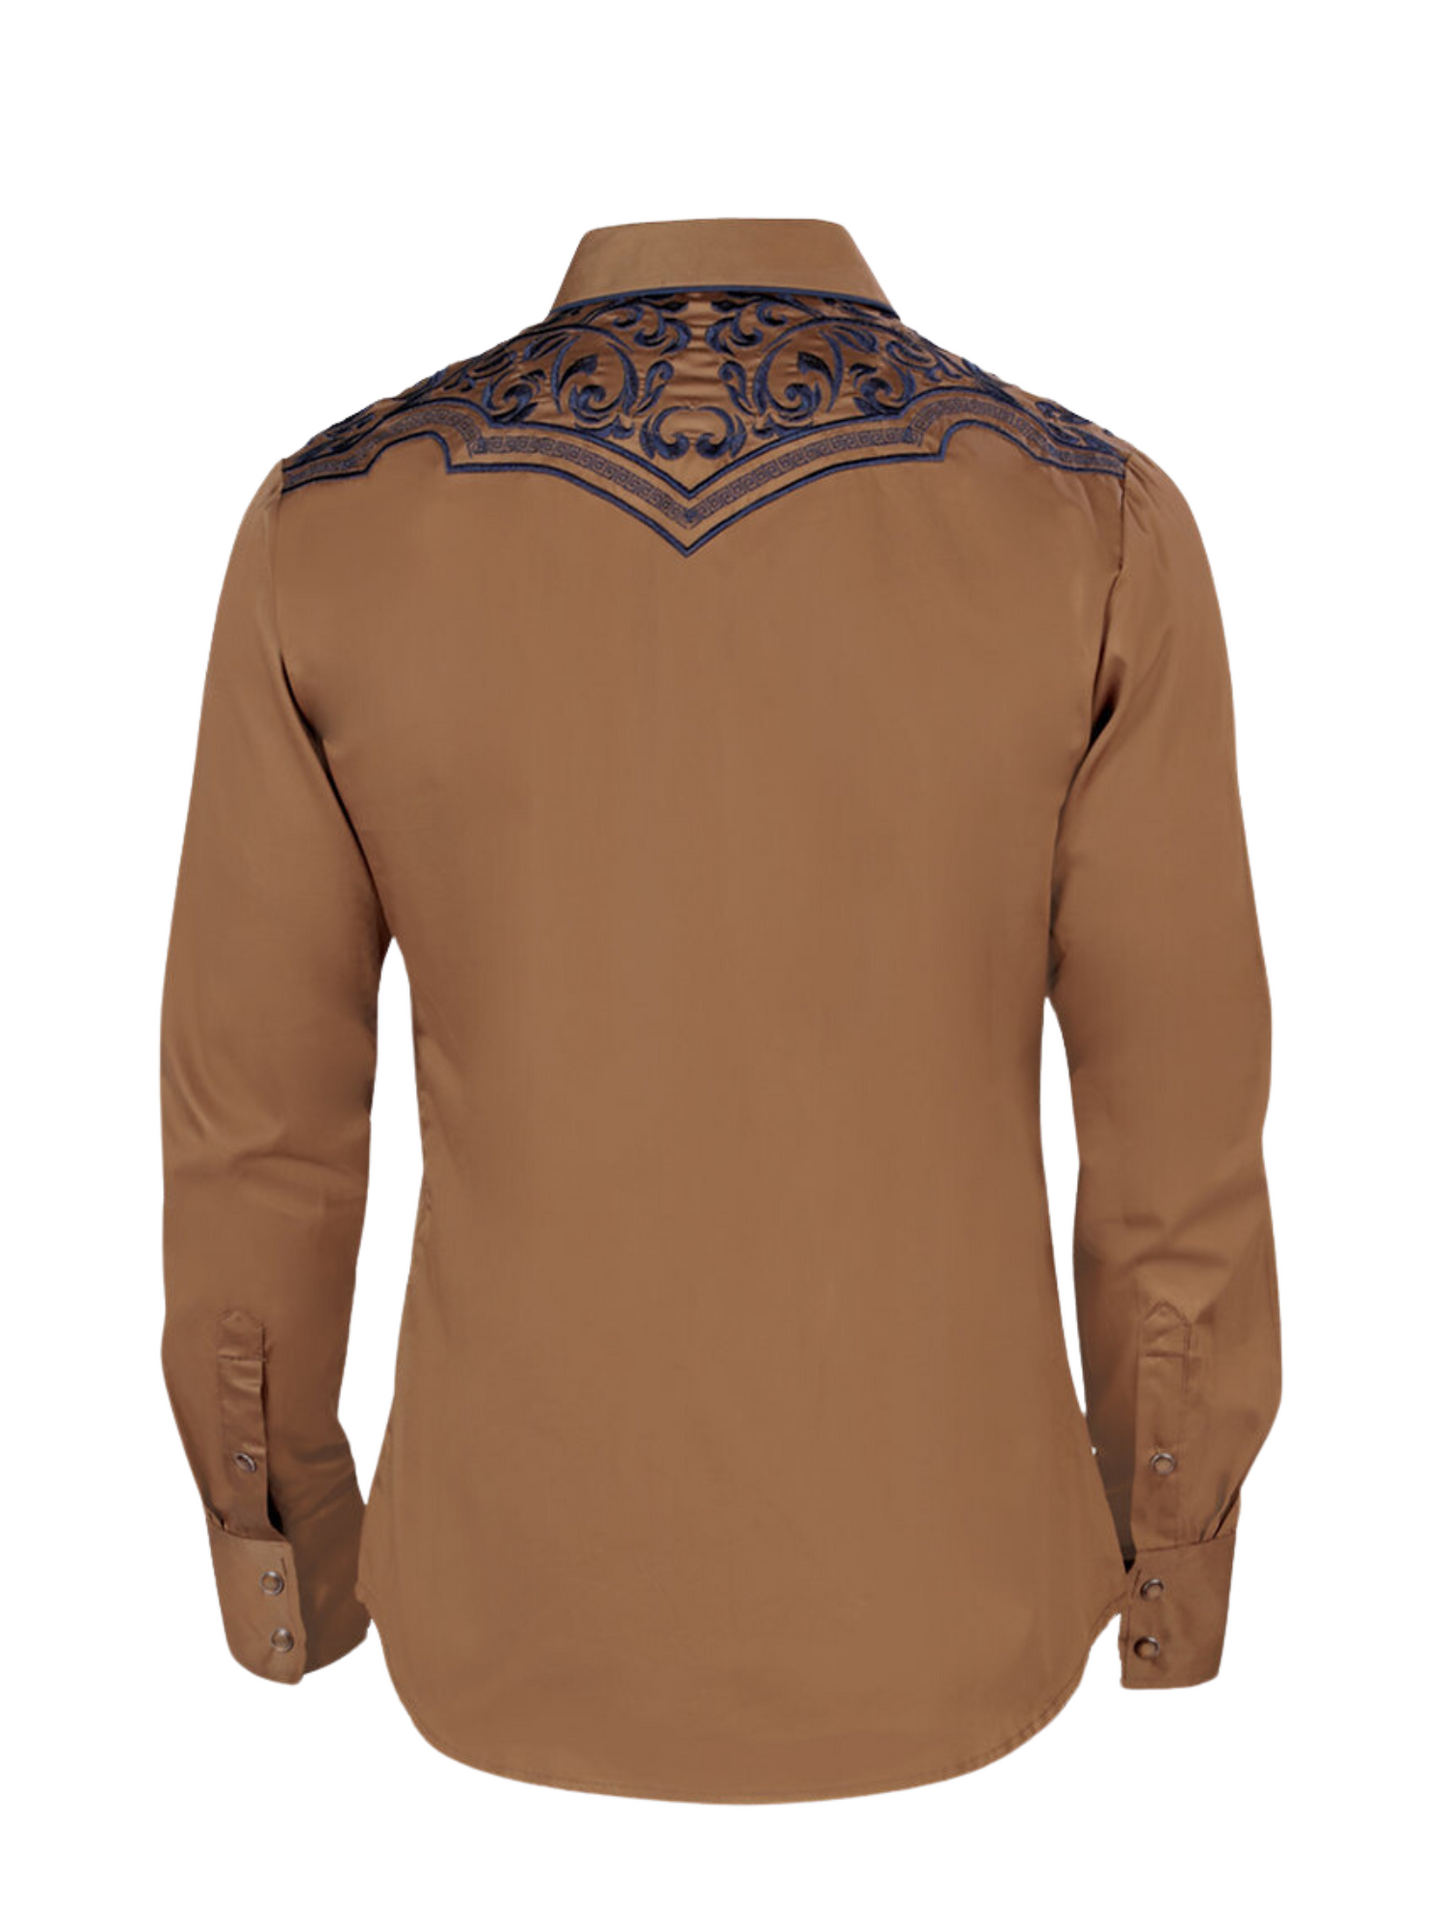 Embroidered Long Sleeve Denim Shirt for Men 'Montero' - ID: 3531 Western Shirt Montero